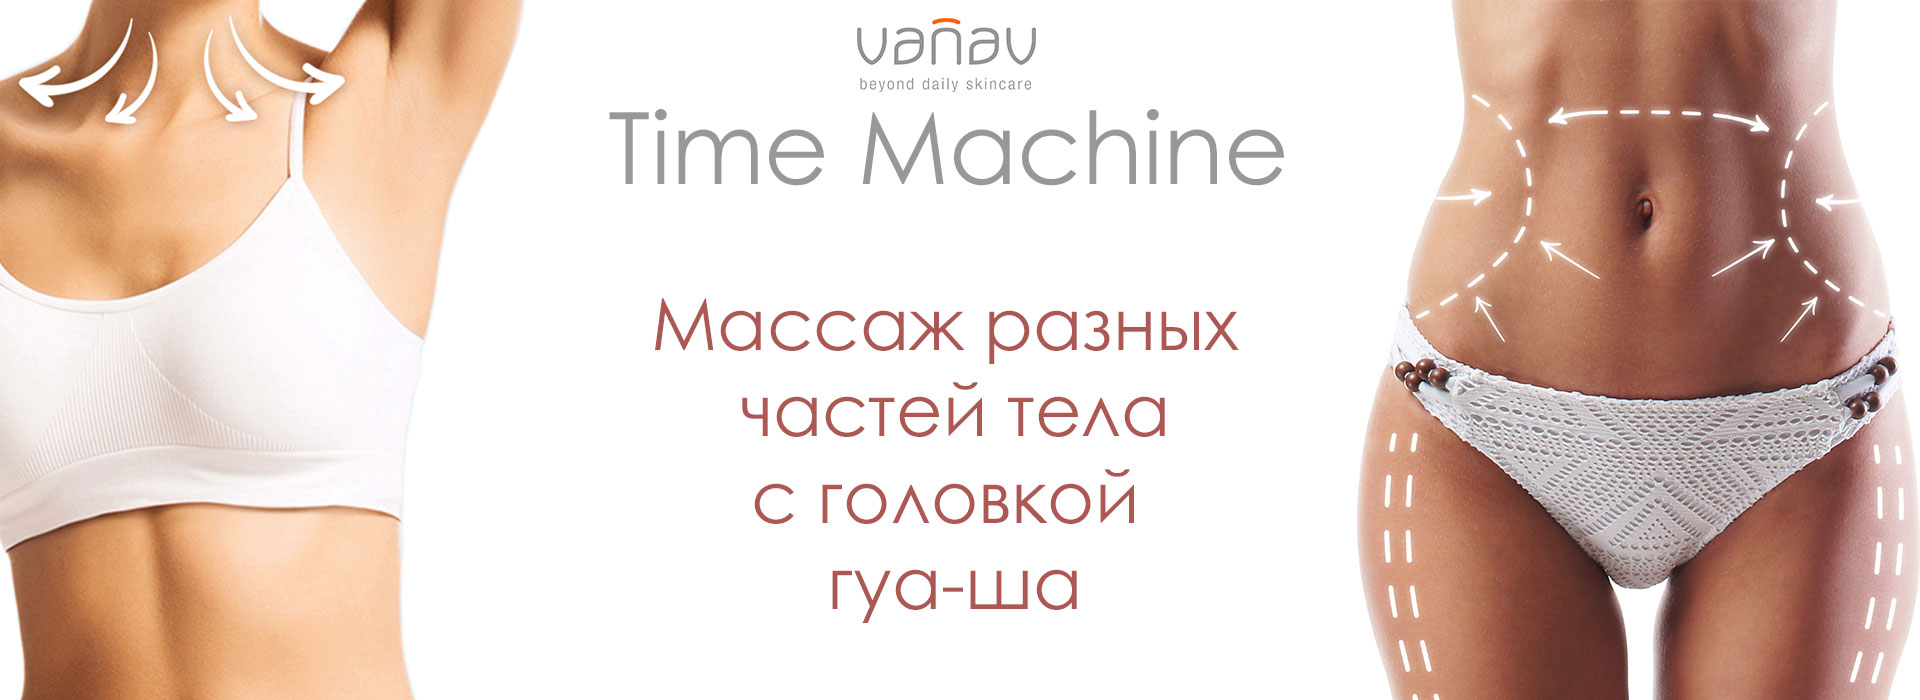 VANAV Time Machine купить